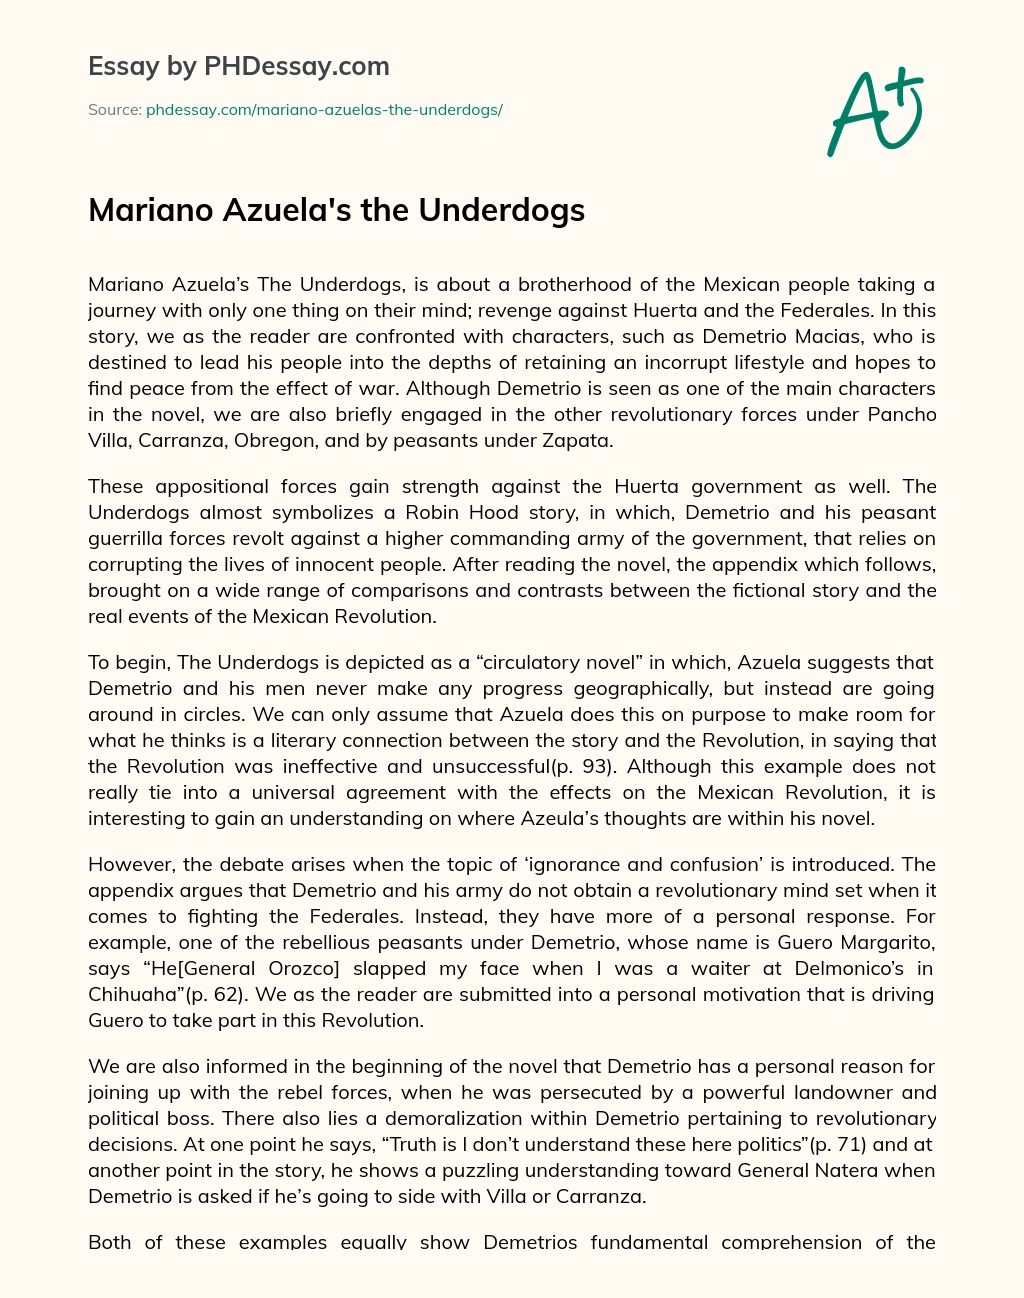 Mariano Azuela’s the Underdogs essay